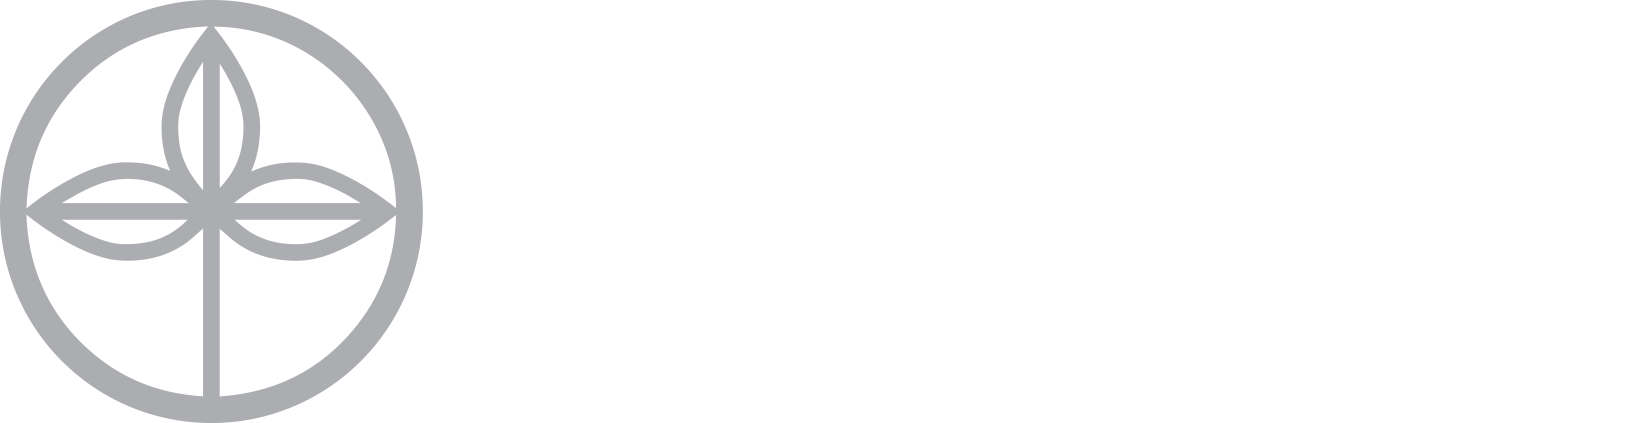 Illinois Crop Improvement Association